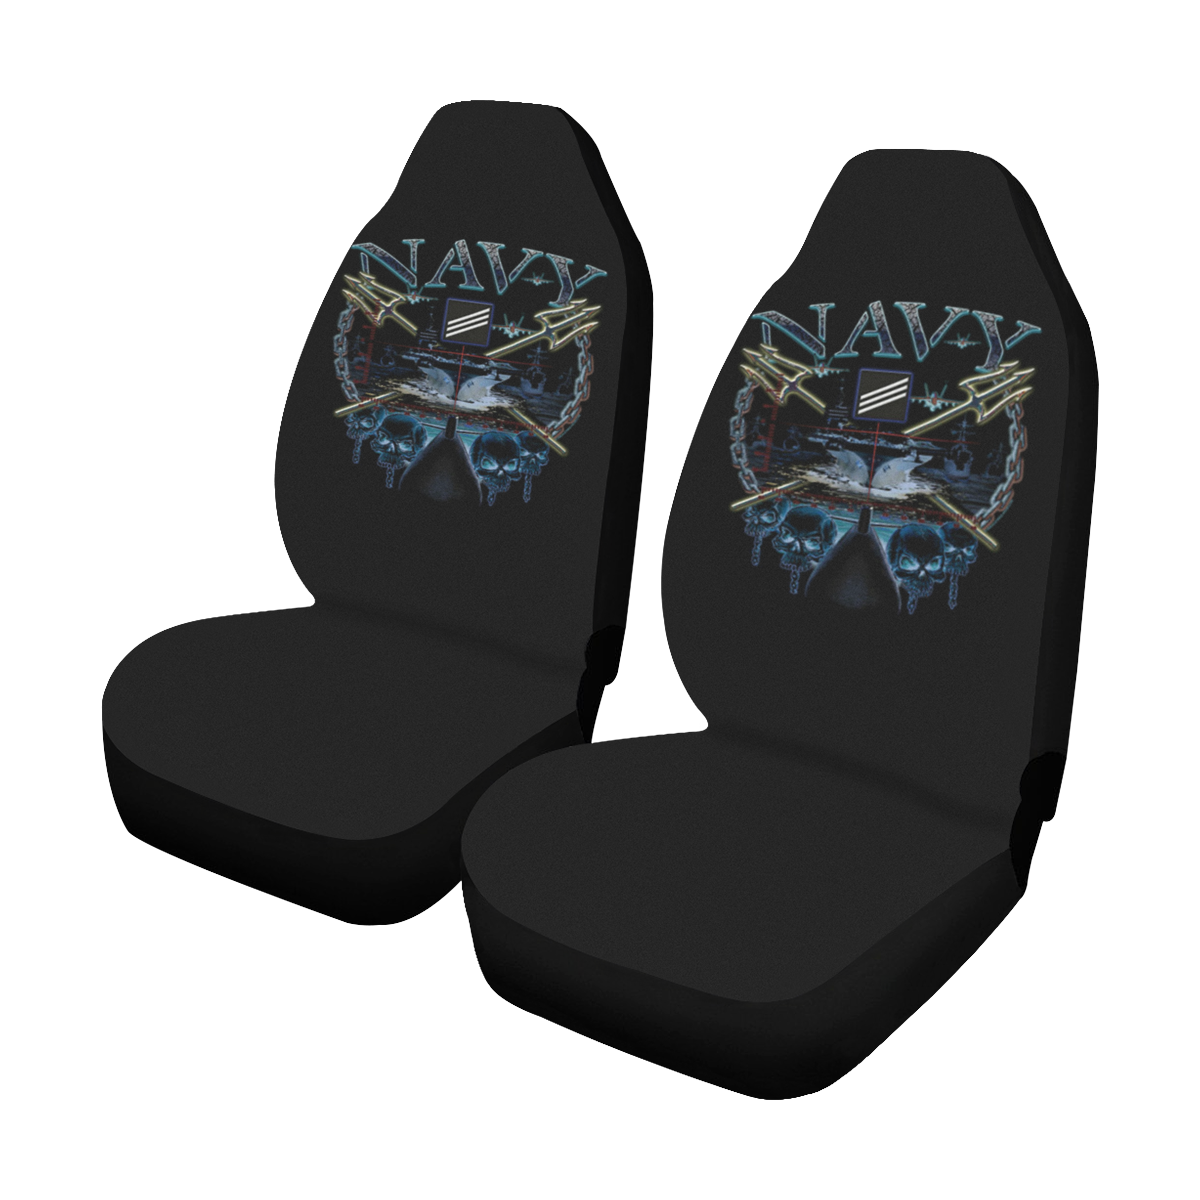 Navy Seaman E-3 Car Seat Covers (Set of 2)